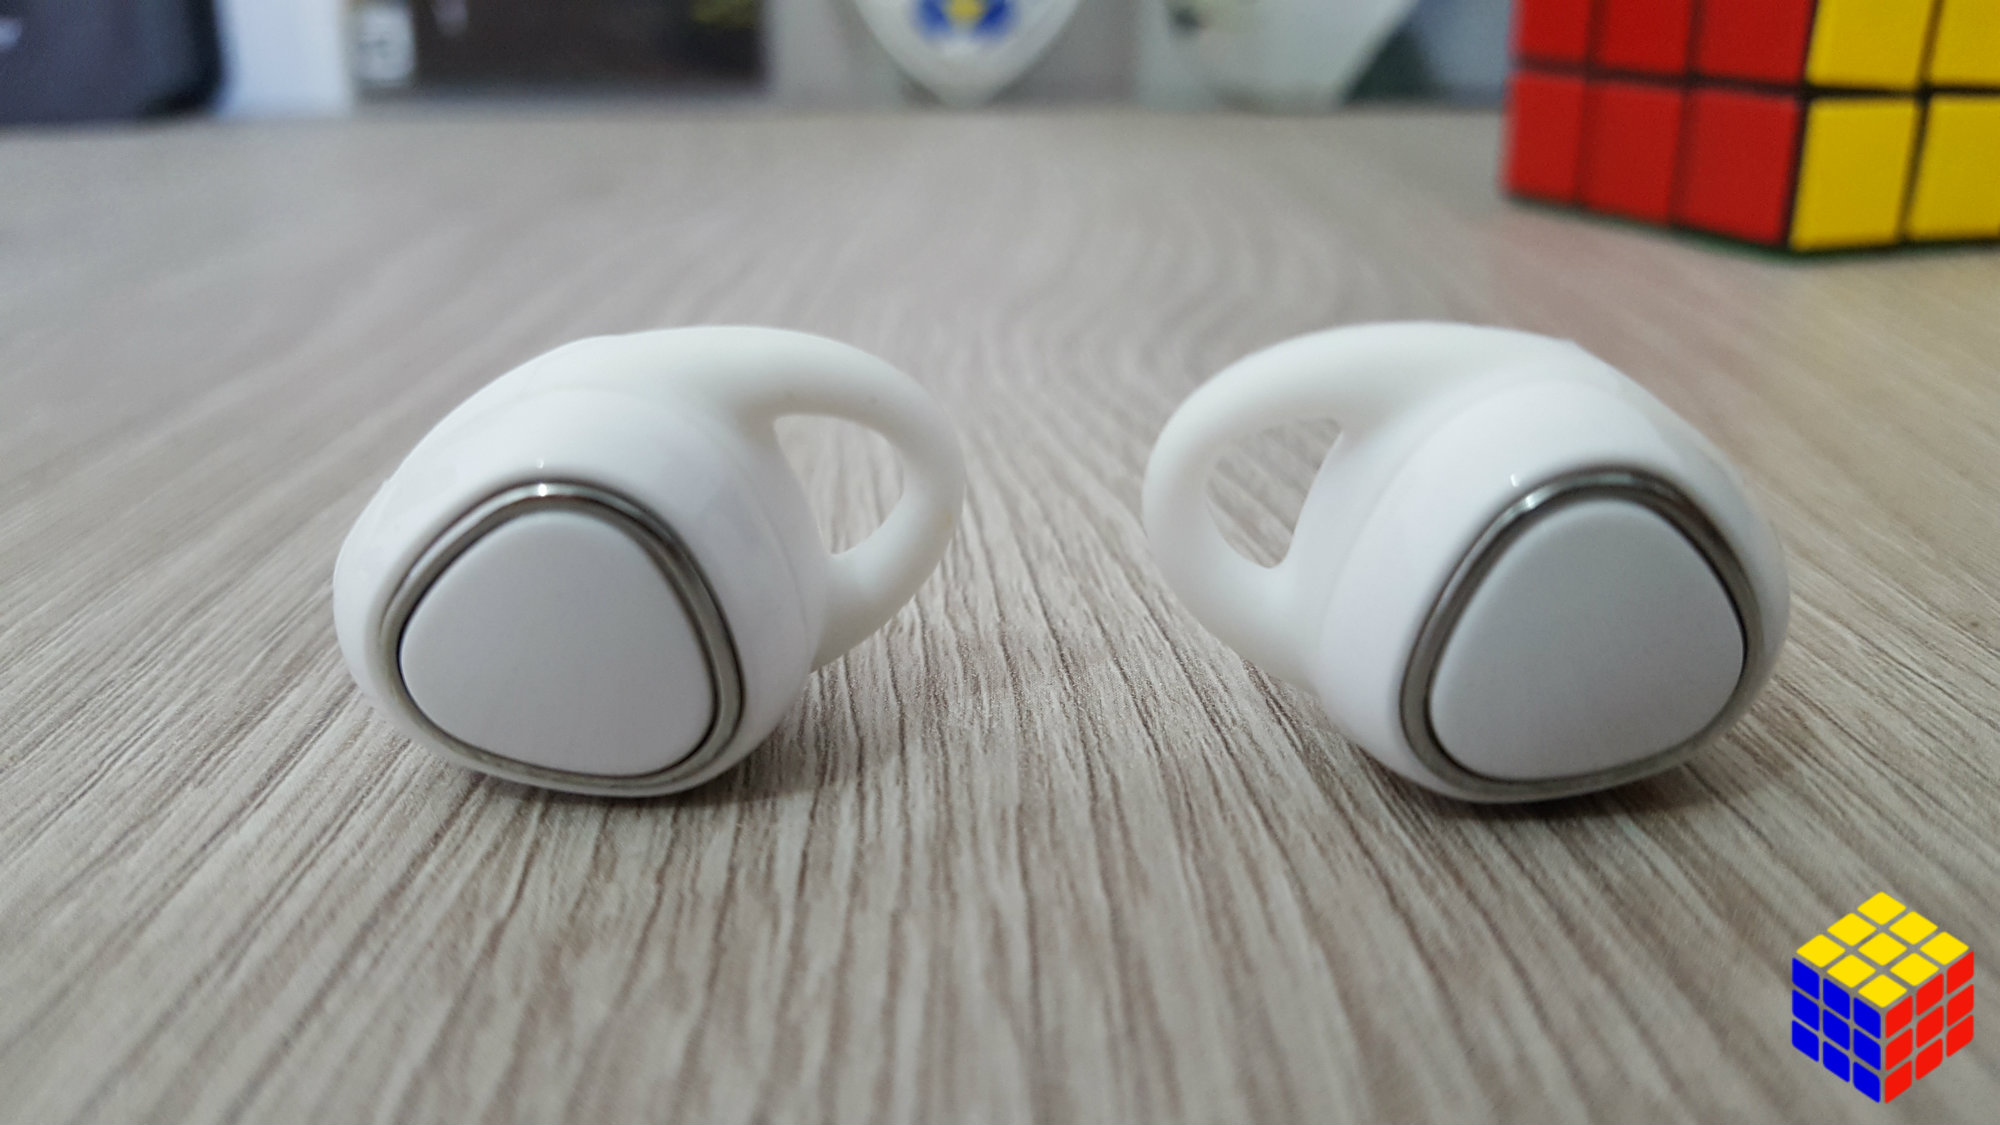 TWS-R150: A very inexpensive alternative to wireless bluetooth headphones